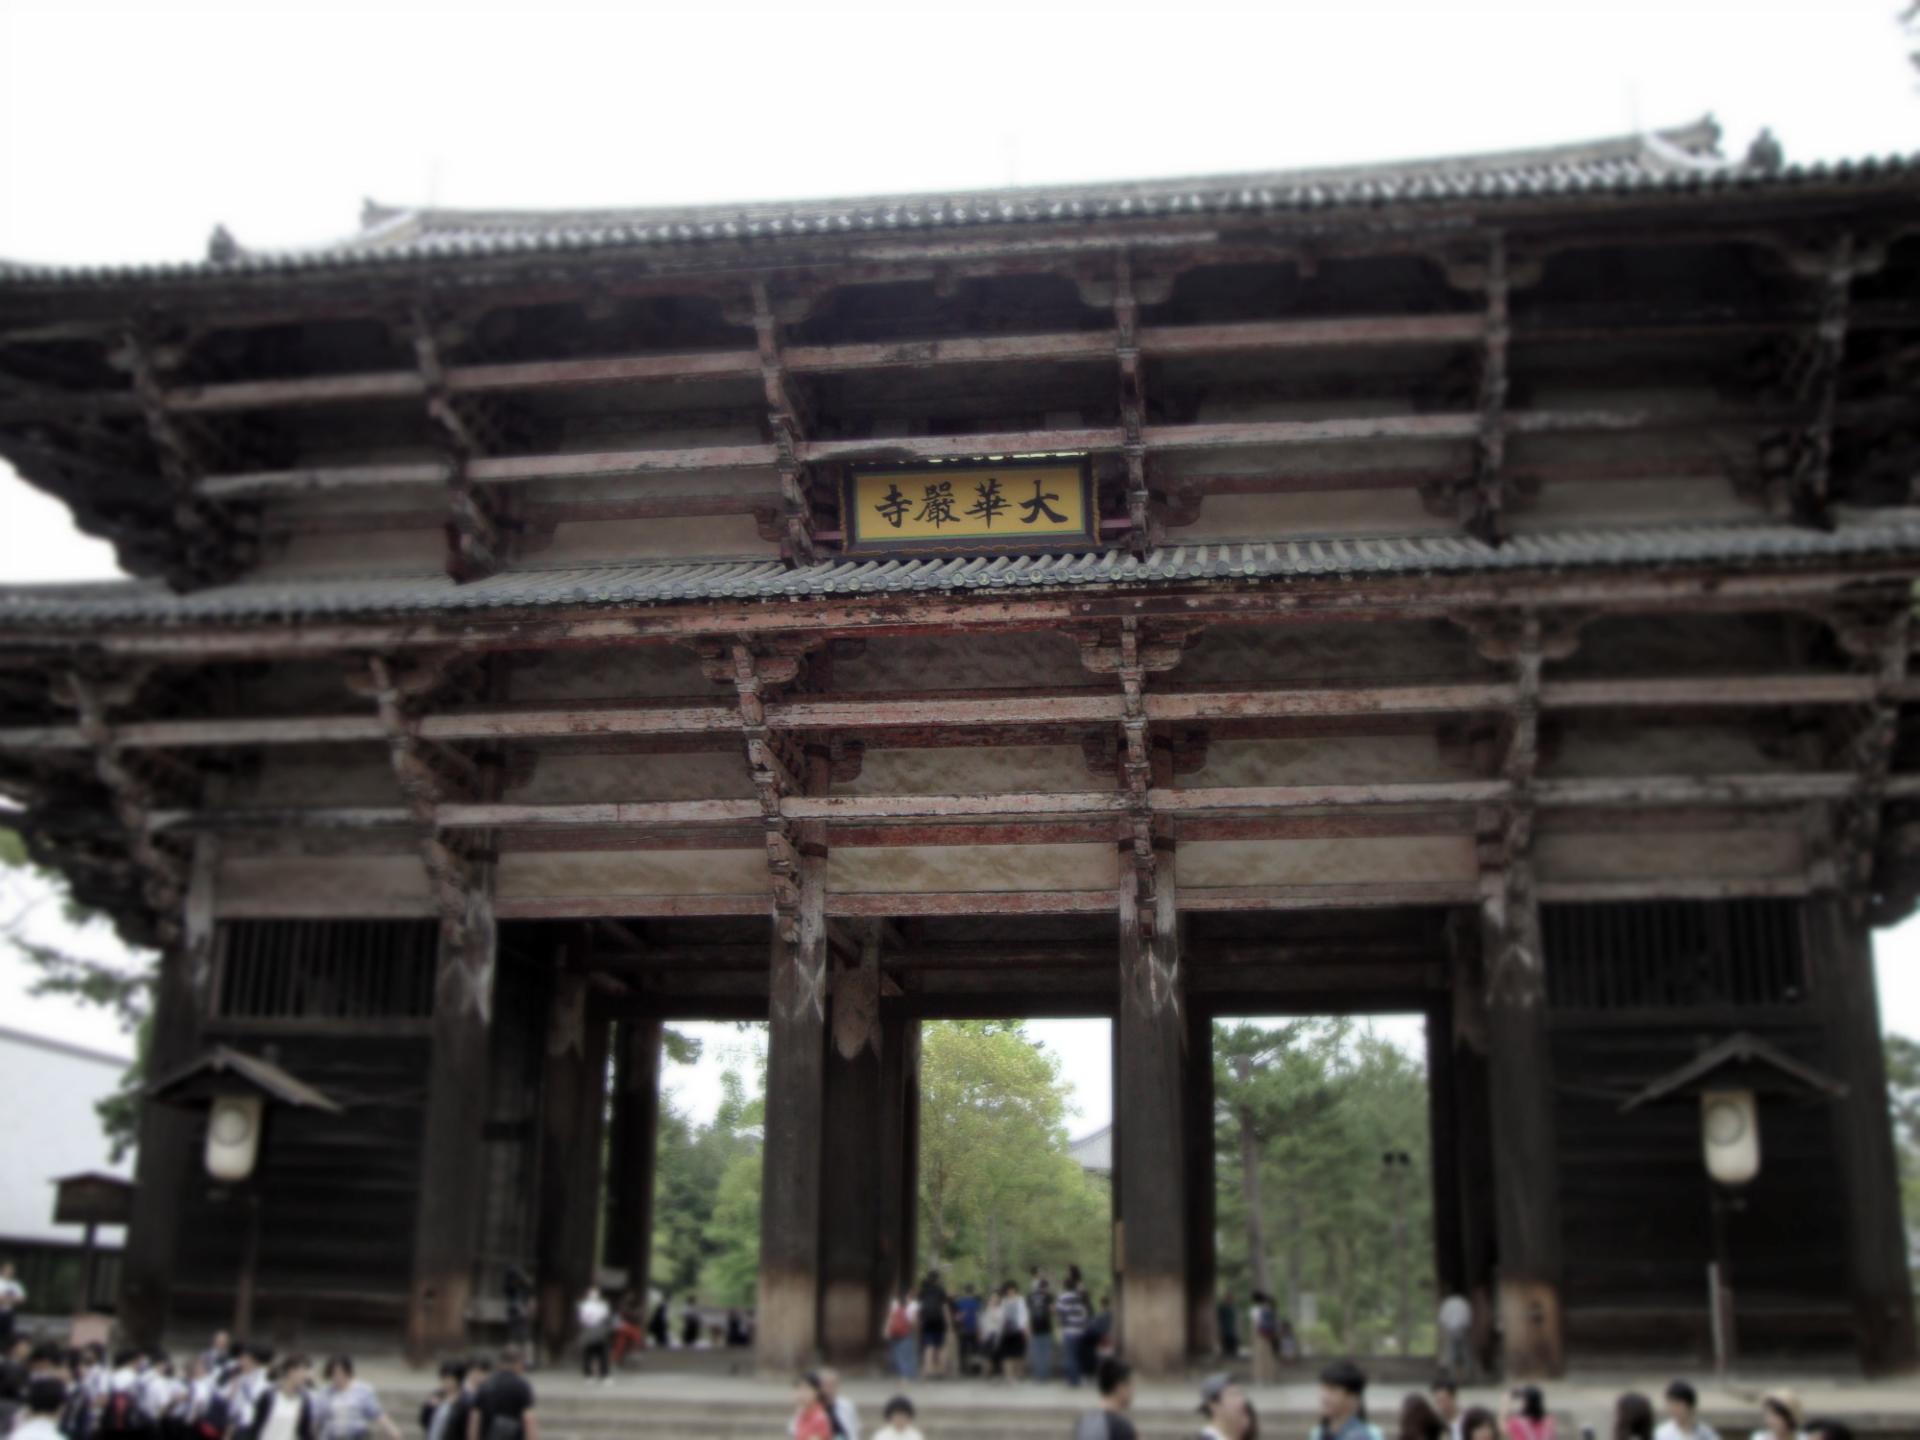 Todaiji gate: the large wooden gate at Todai-ji temple in Nara Japan